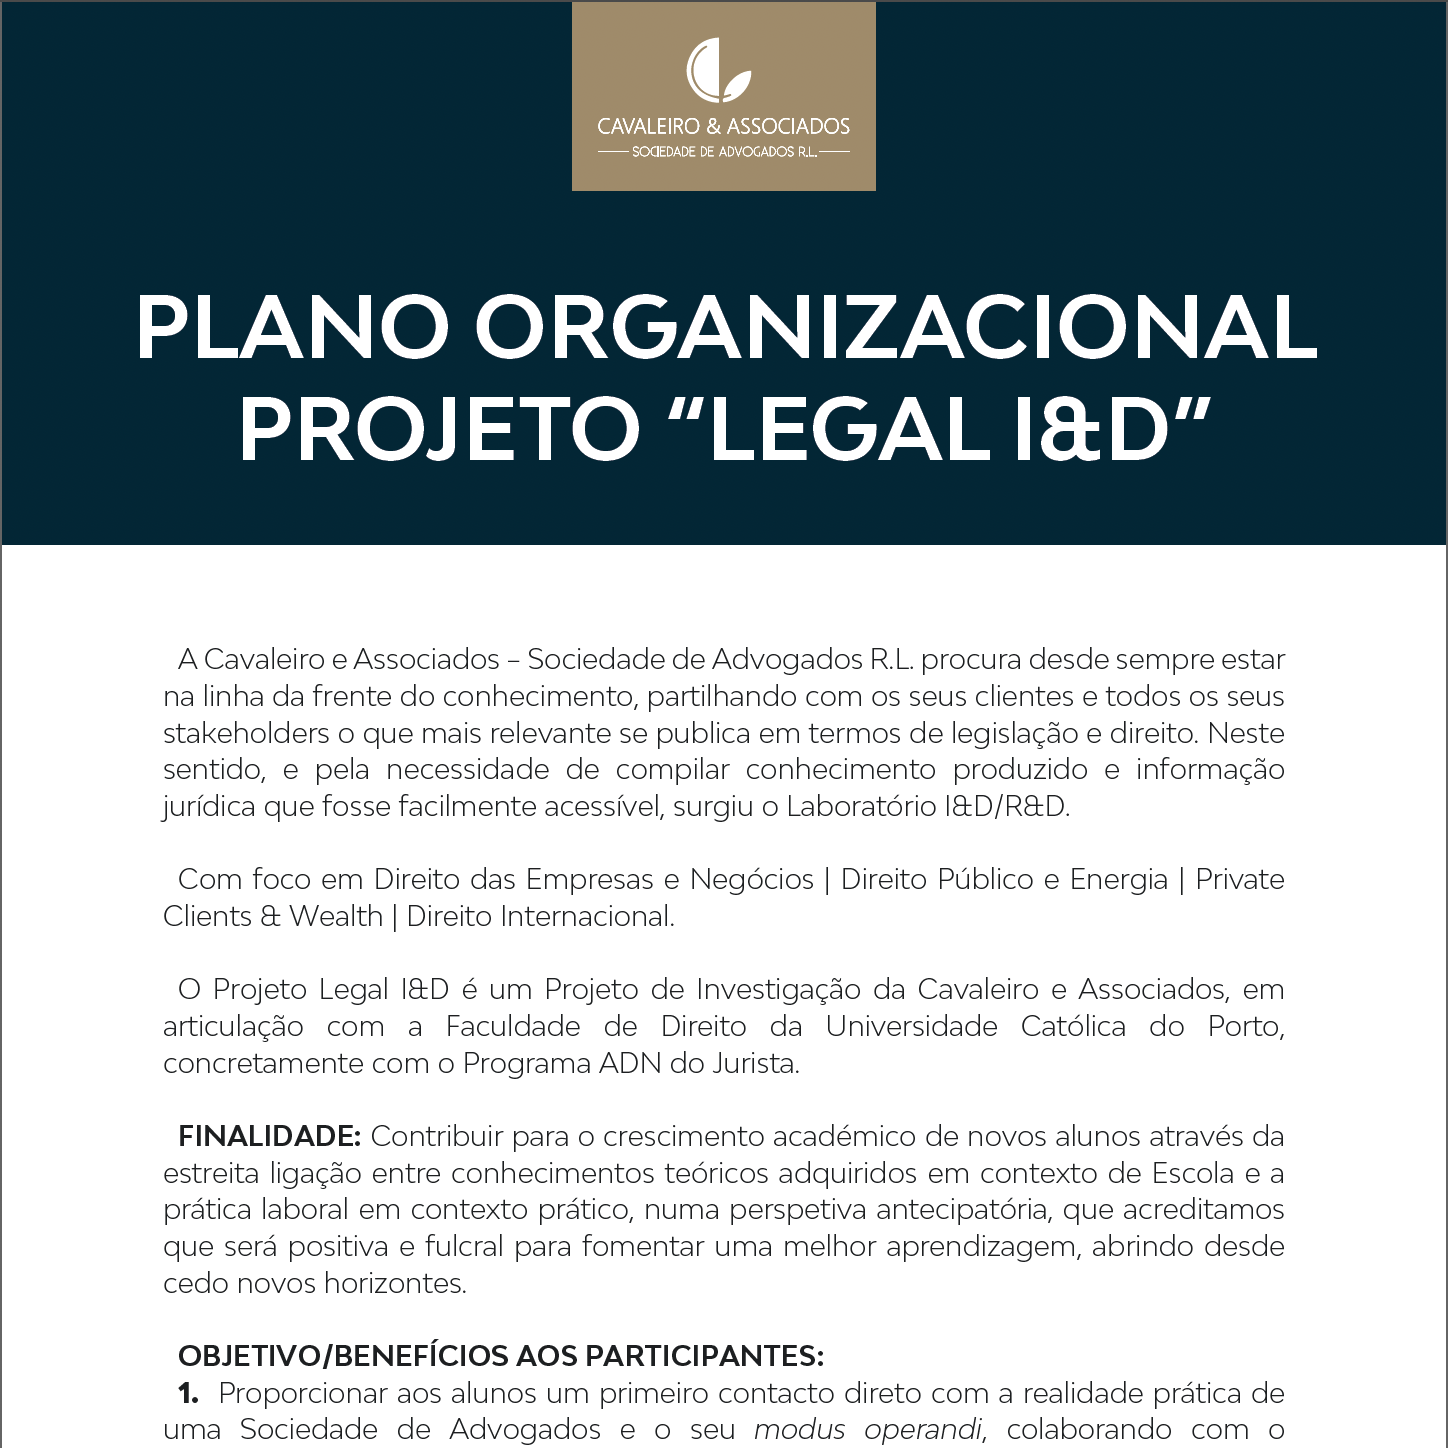 Plano Organizacional Projeto “Legal I&D”